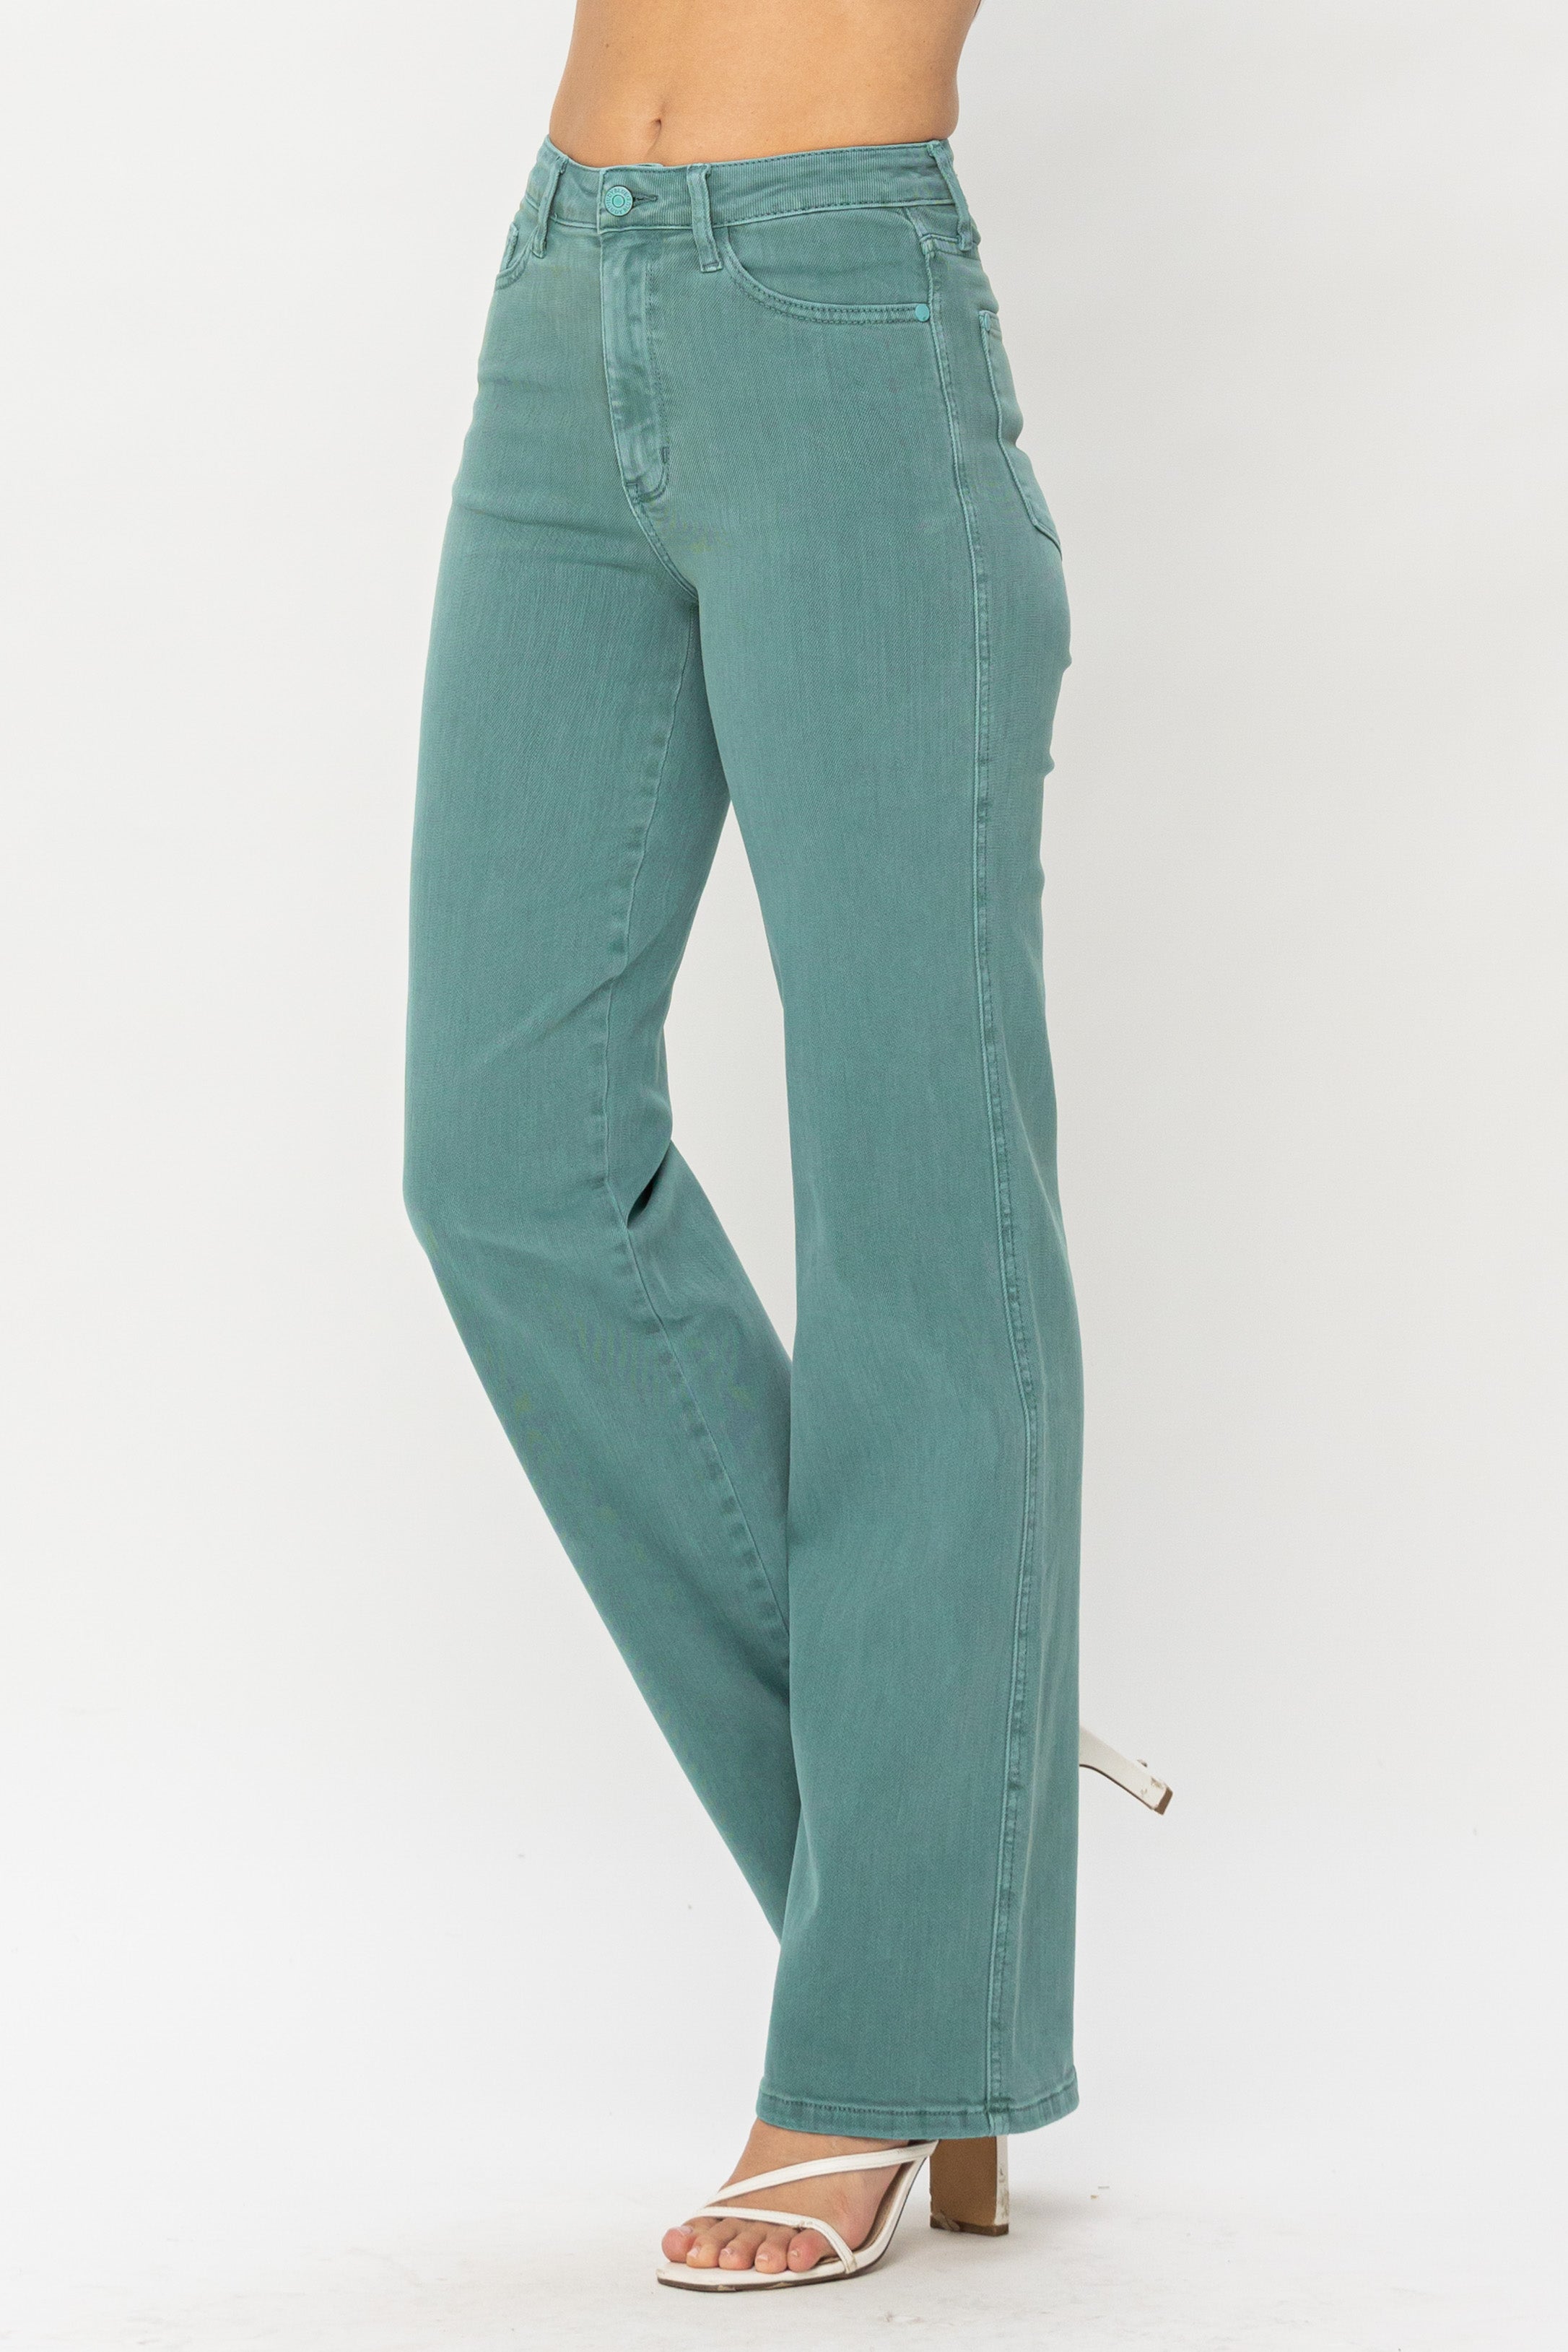 Judy Blue Jeans 88621